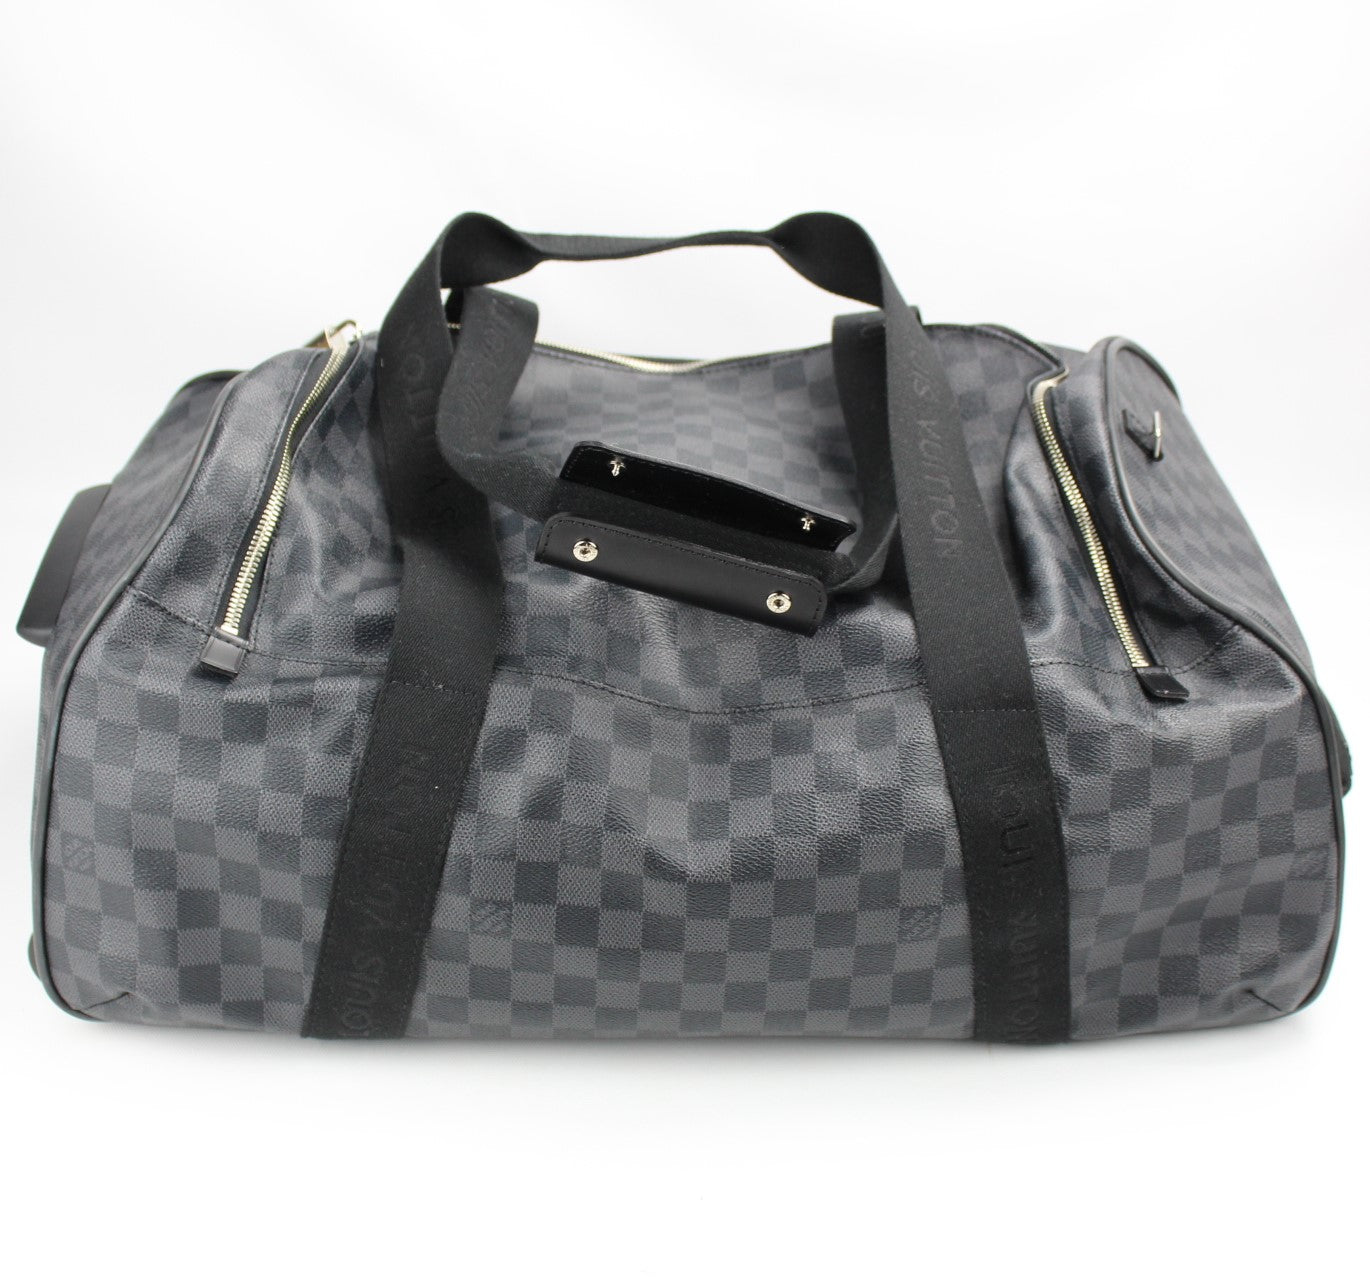 Louis Vuitton Neo Eole 55 Damier Graphite Travel Bag Black